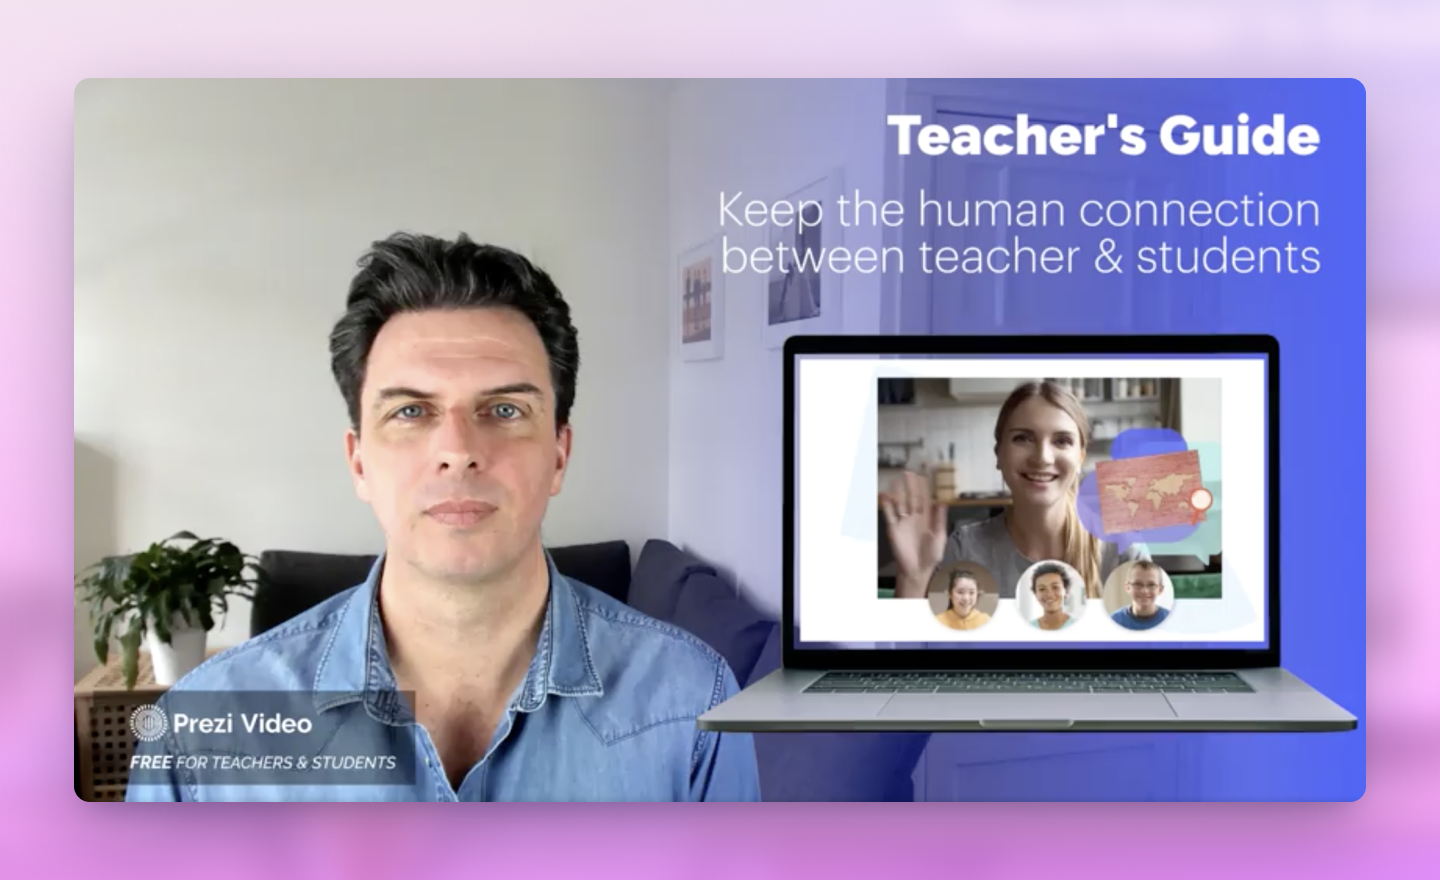 Leitfaden zu Prezi Video für Lehrer